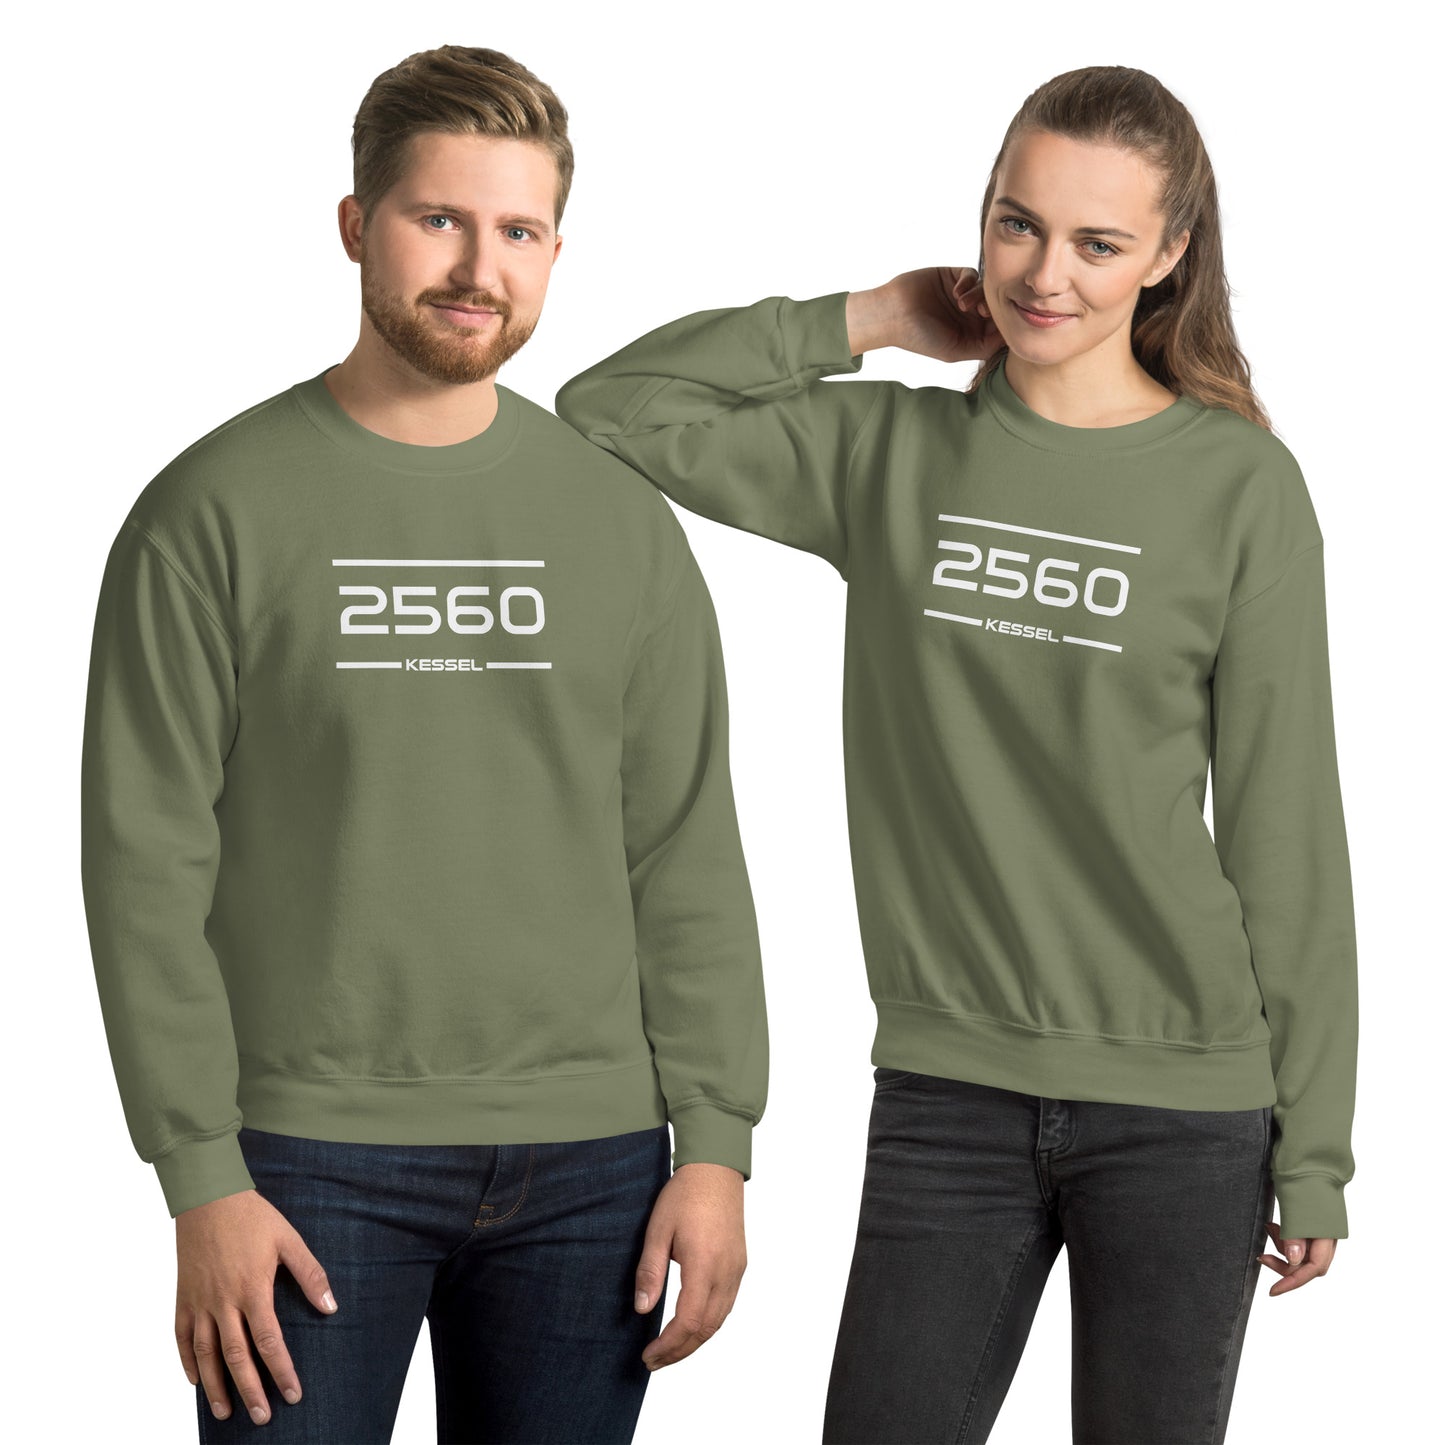 Sweater - 2560 - Kessel (M/V)